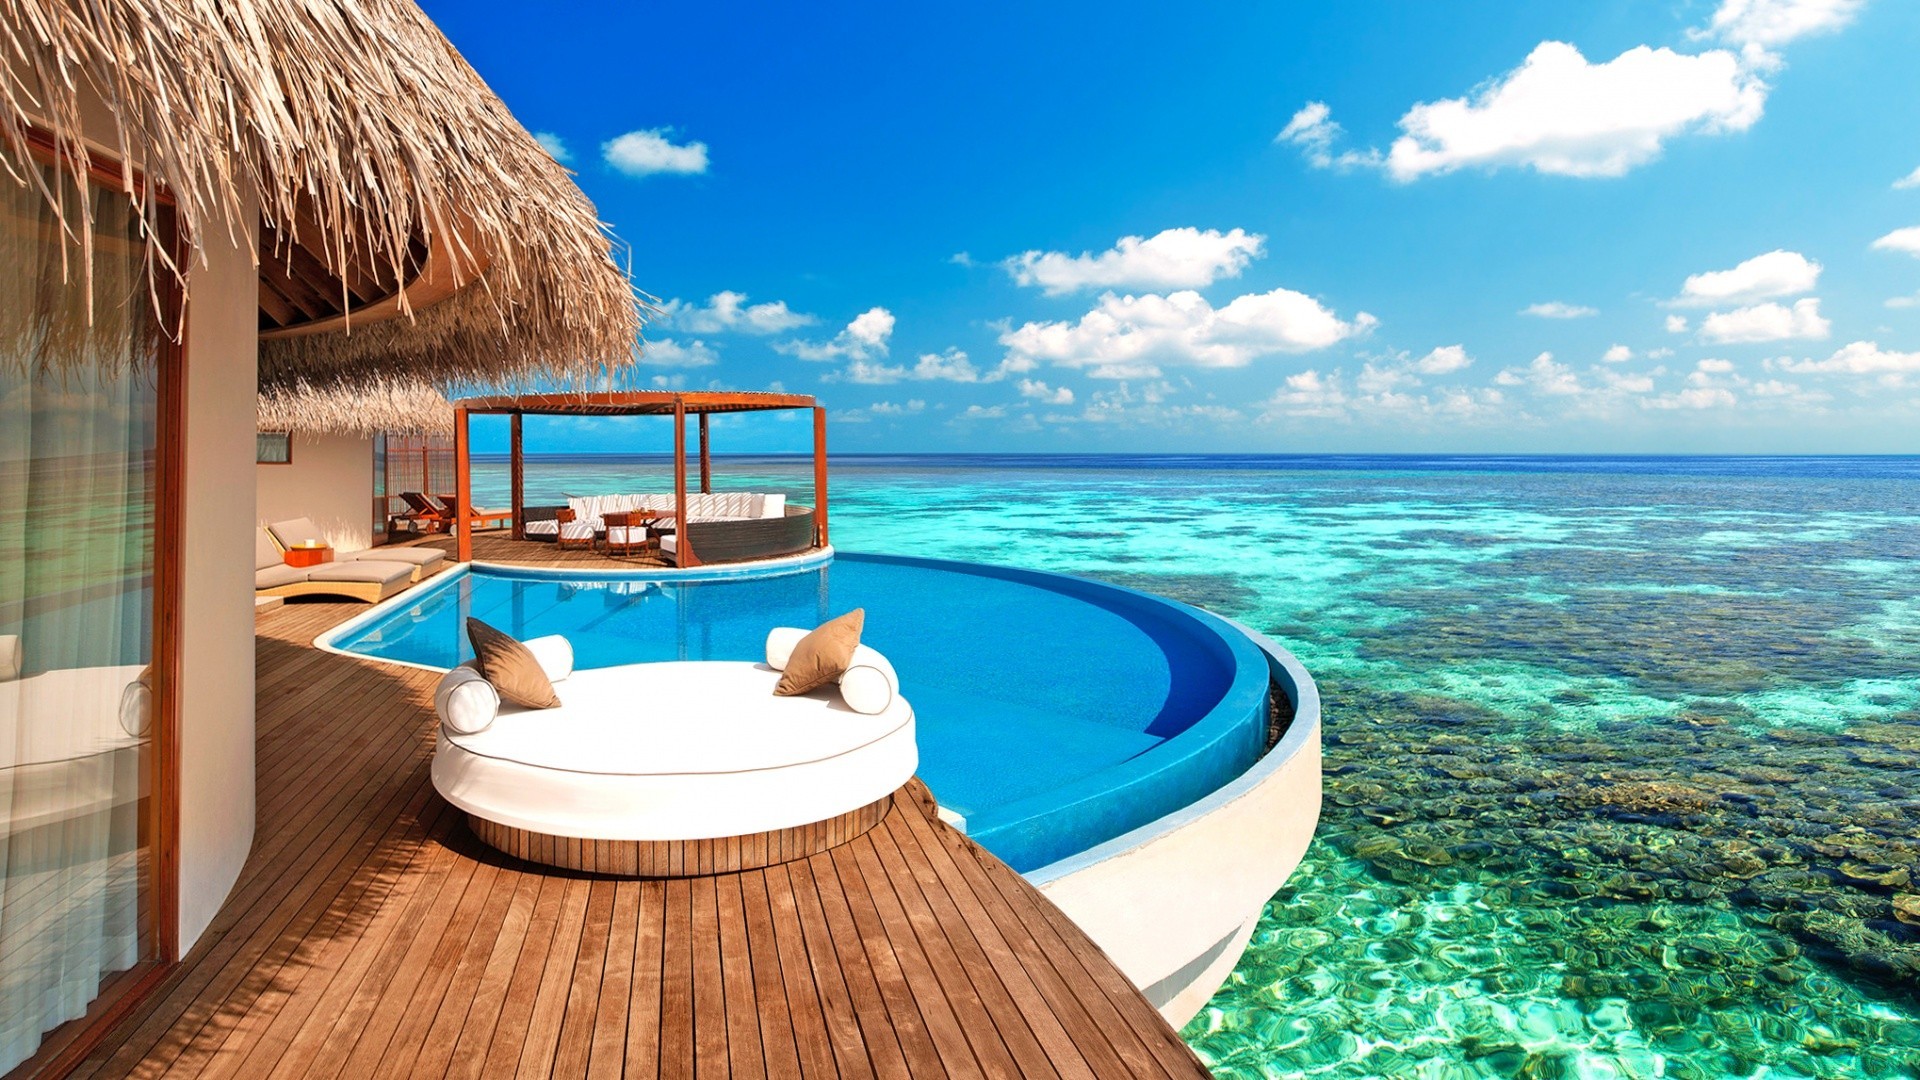 islands tropical water resort relaxation travel beach vacation summer turquoise chair ocean island idyllic sea sand seashore exotic hotel paradise